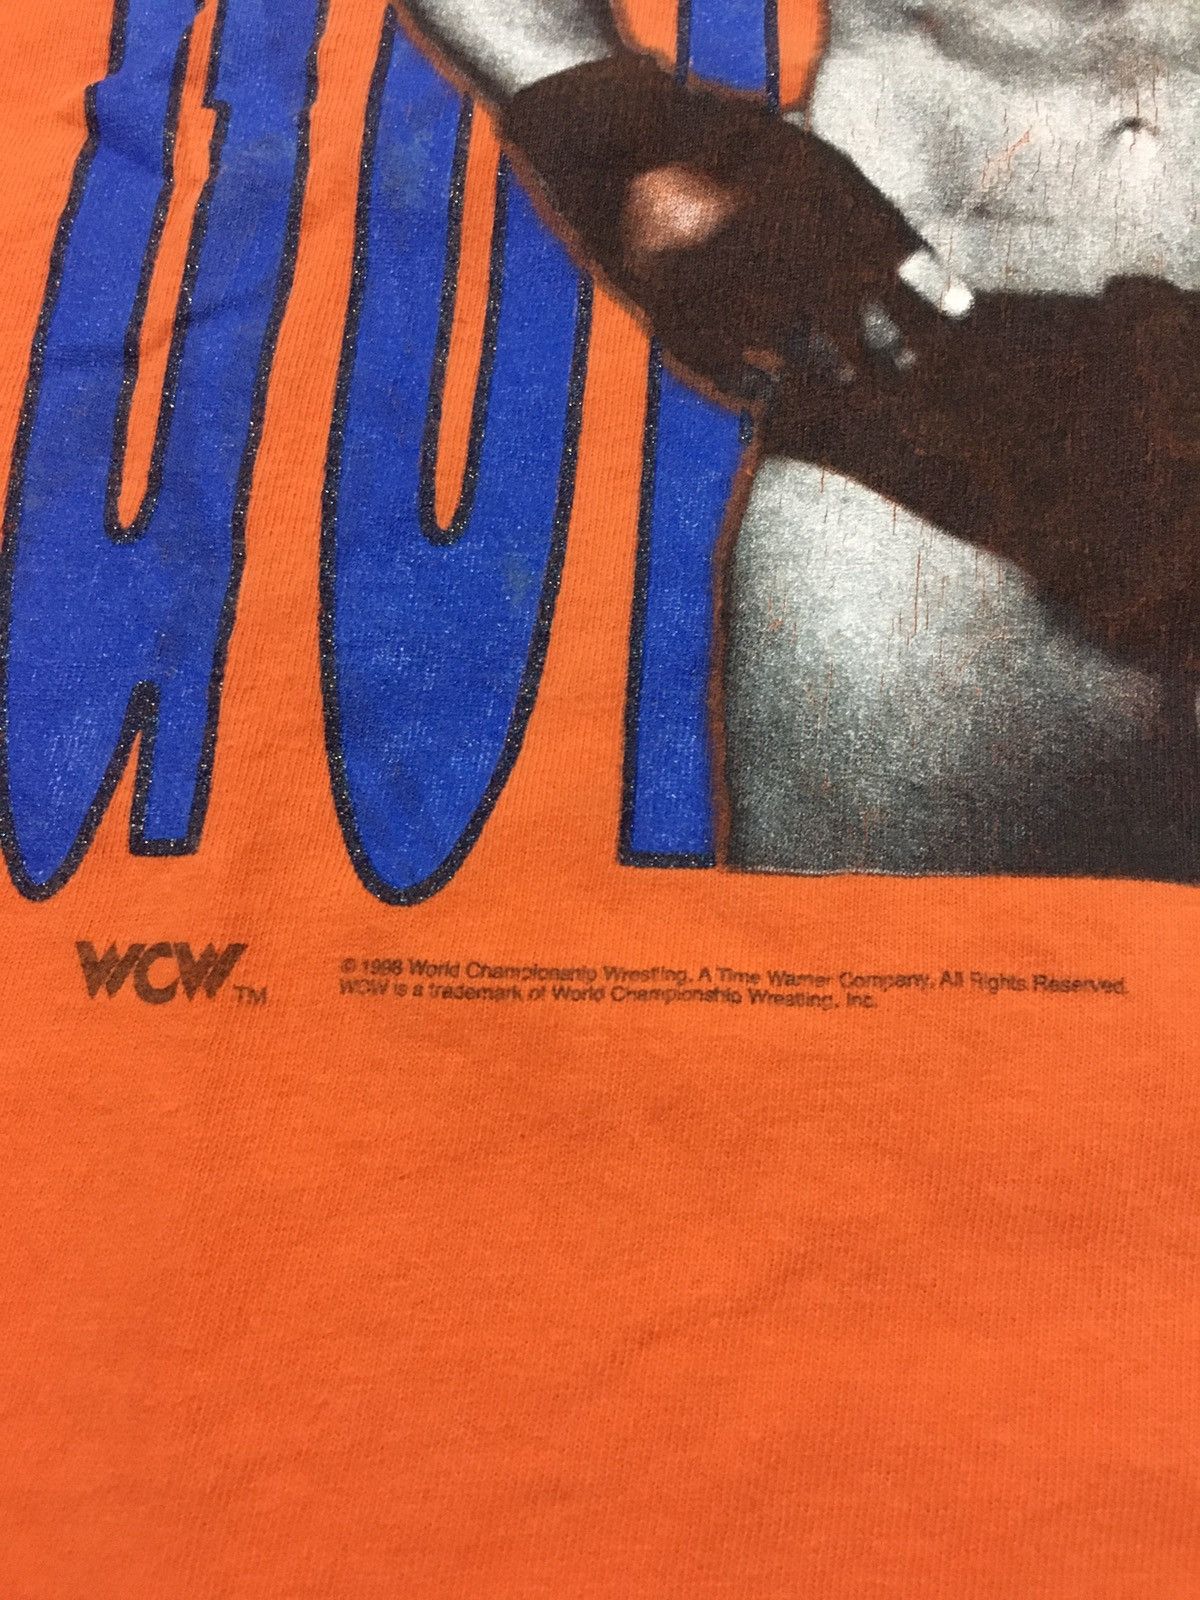 Vintage Vintage 1998 Wrestling Goldberg Wcw Wwf Wwe Tshirt Orange M Size US M / EU 48-50 / 2 - 4 Thumbnail